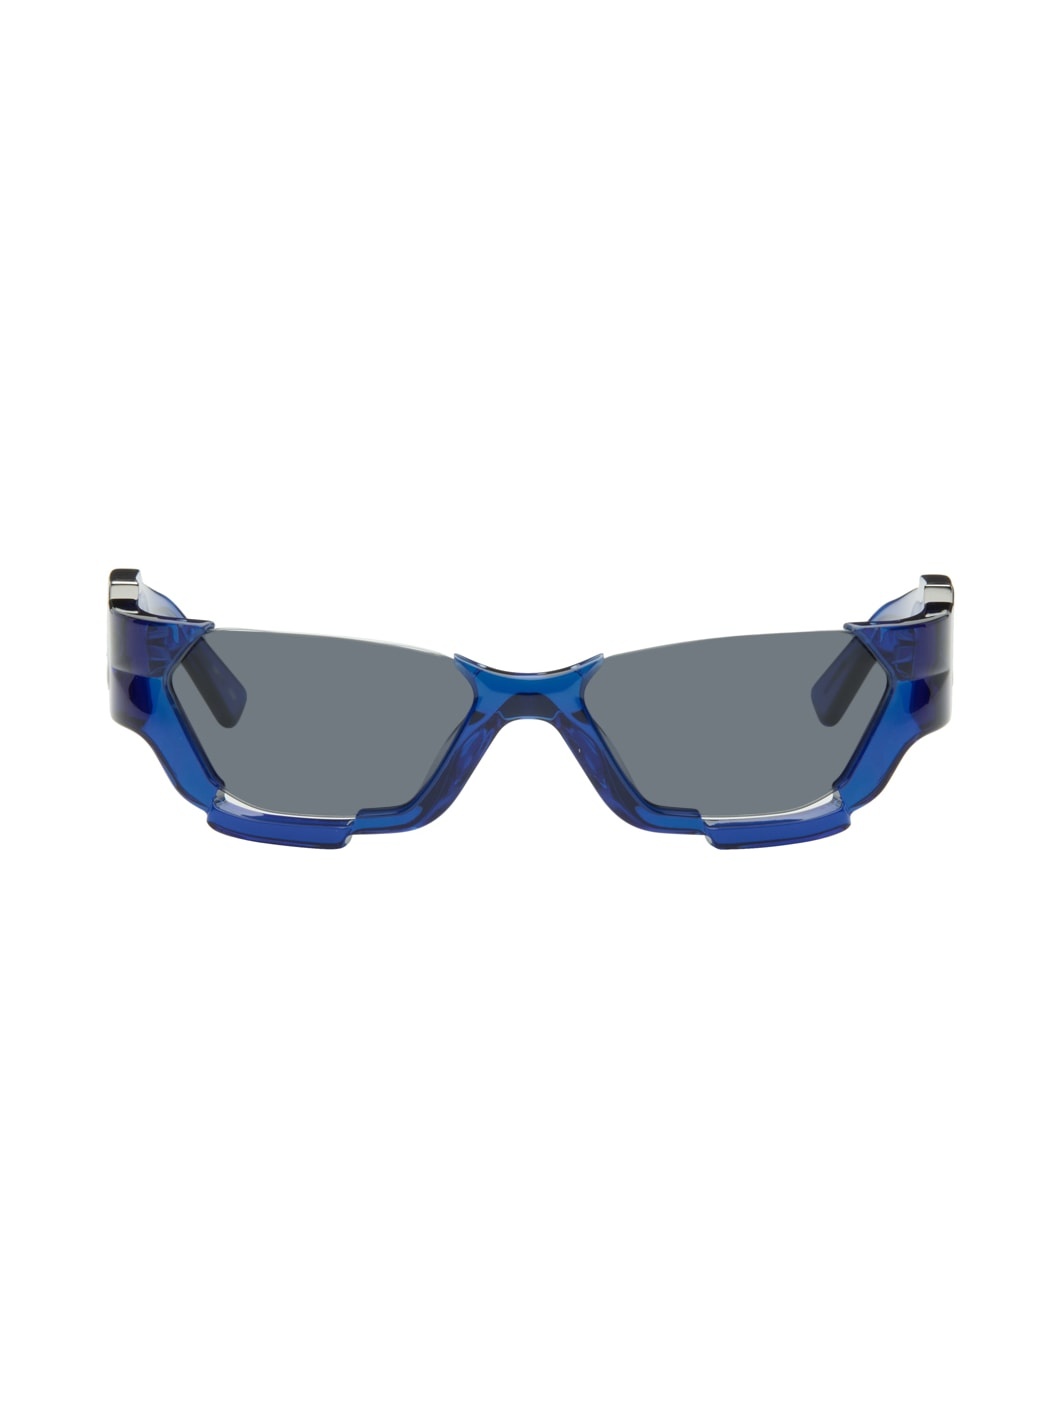 SSENSE Exclusive Blue Deconstructed Sunglasses - 1